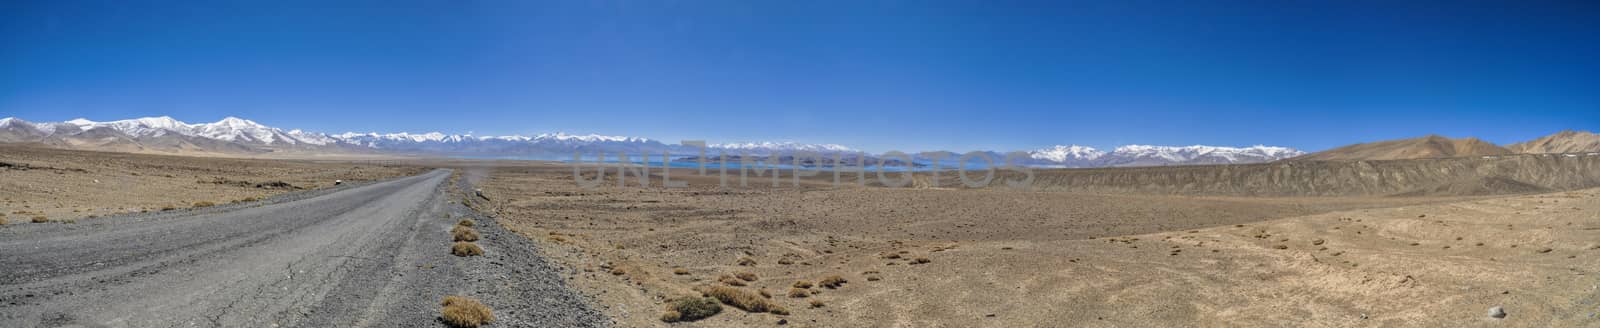 Scenic panorama of road leading through arid landscape in Tajikistan